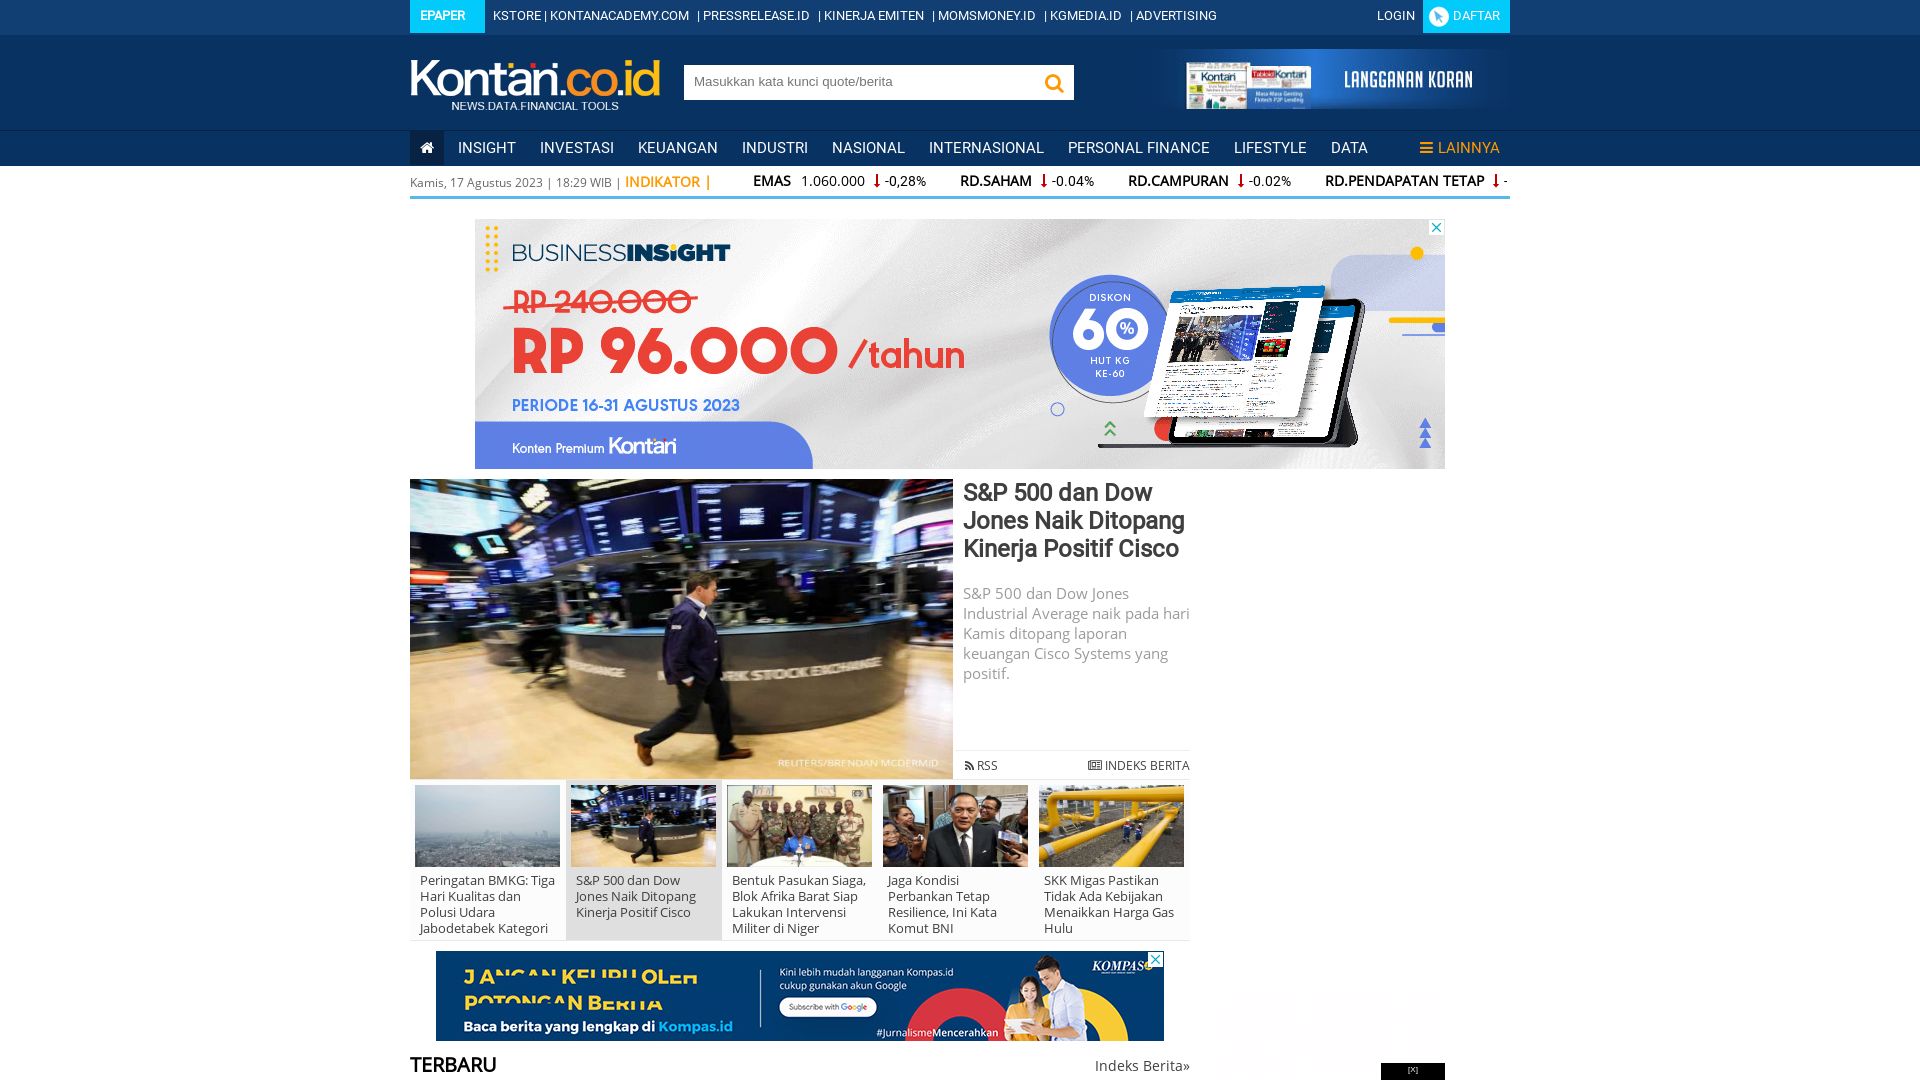 Estado web kontan.co.id está   ONLINE